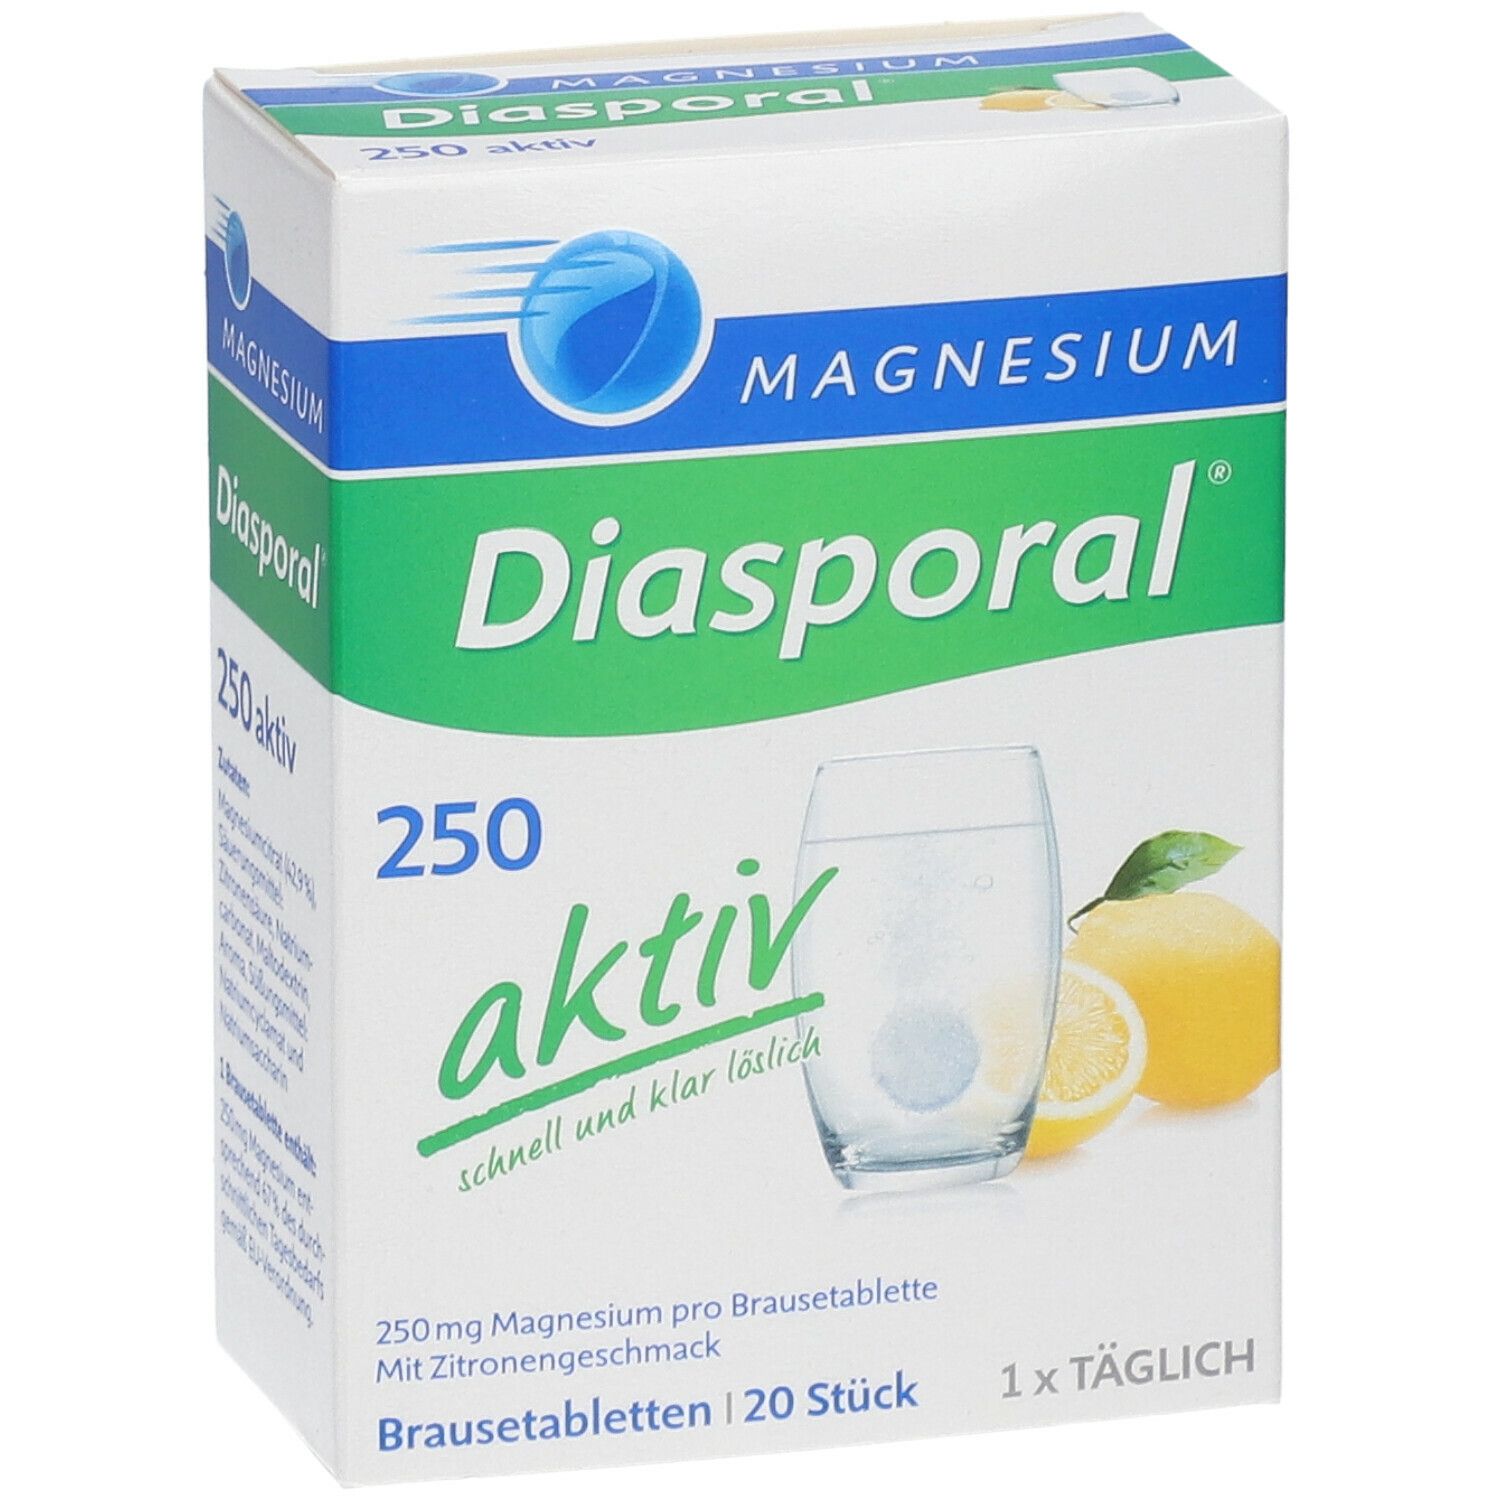 Magnesium-Diasporal® 250 aktiv